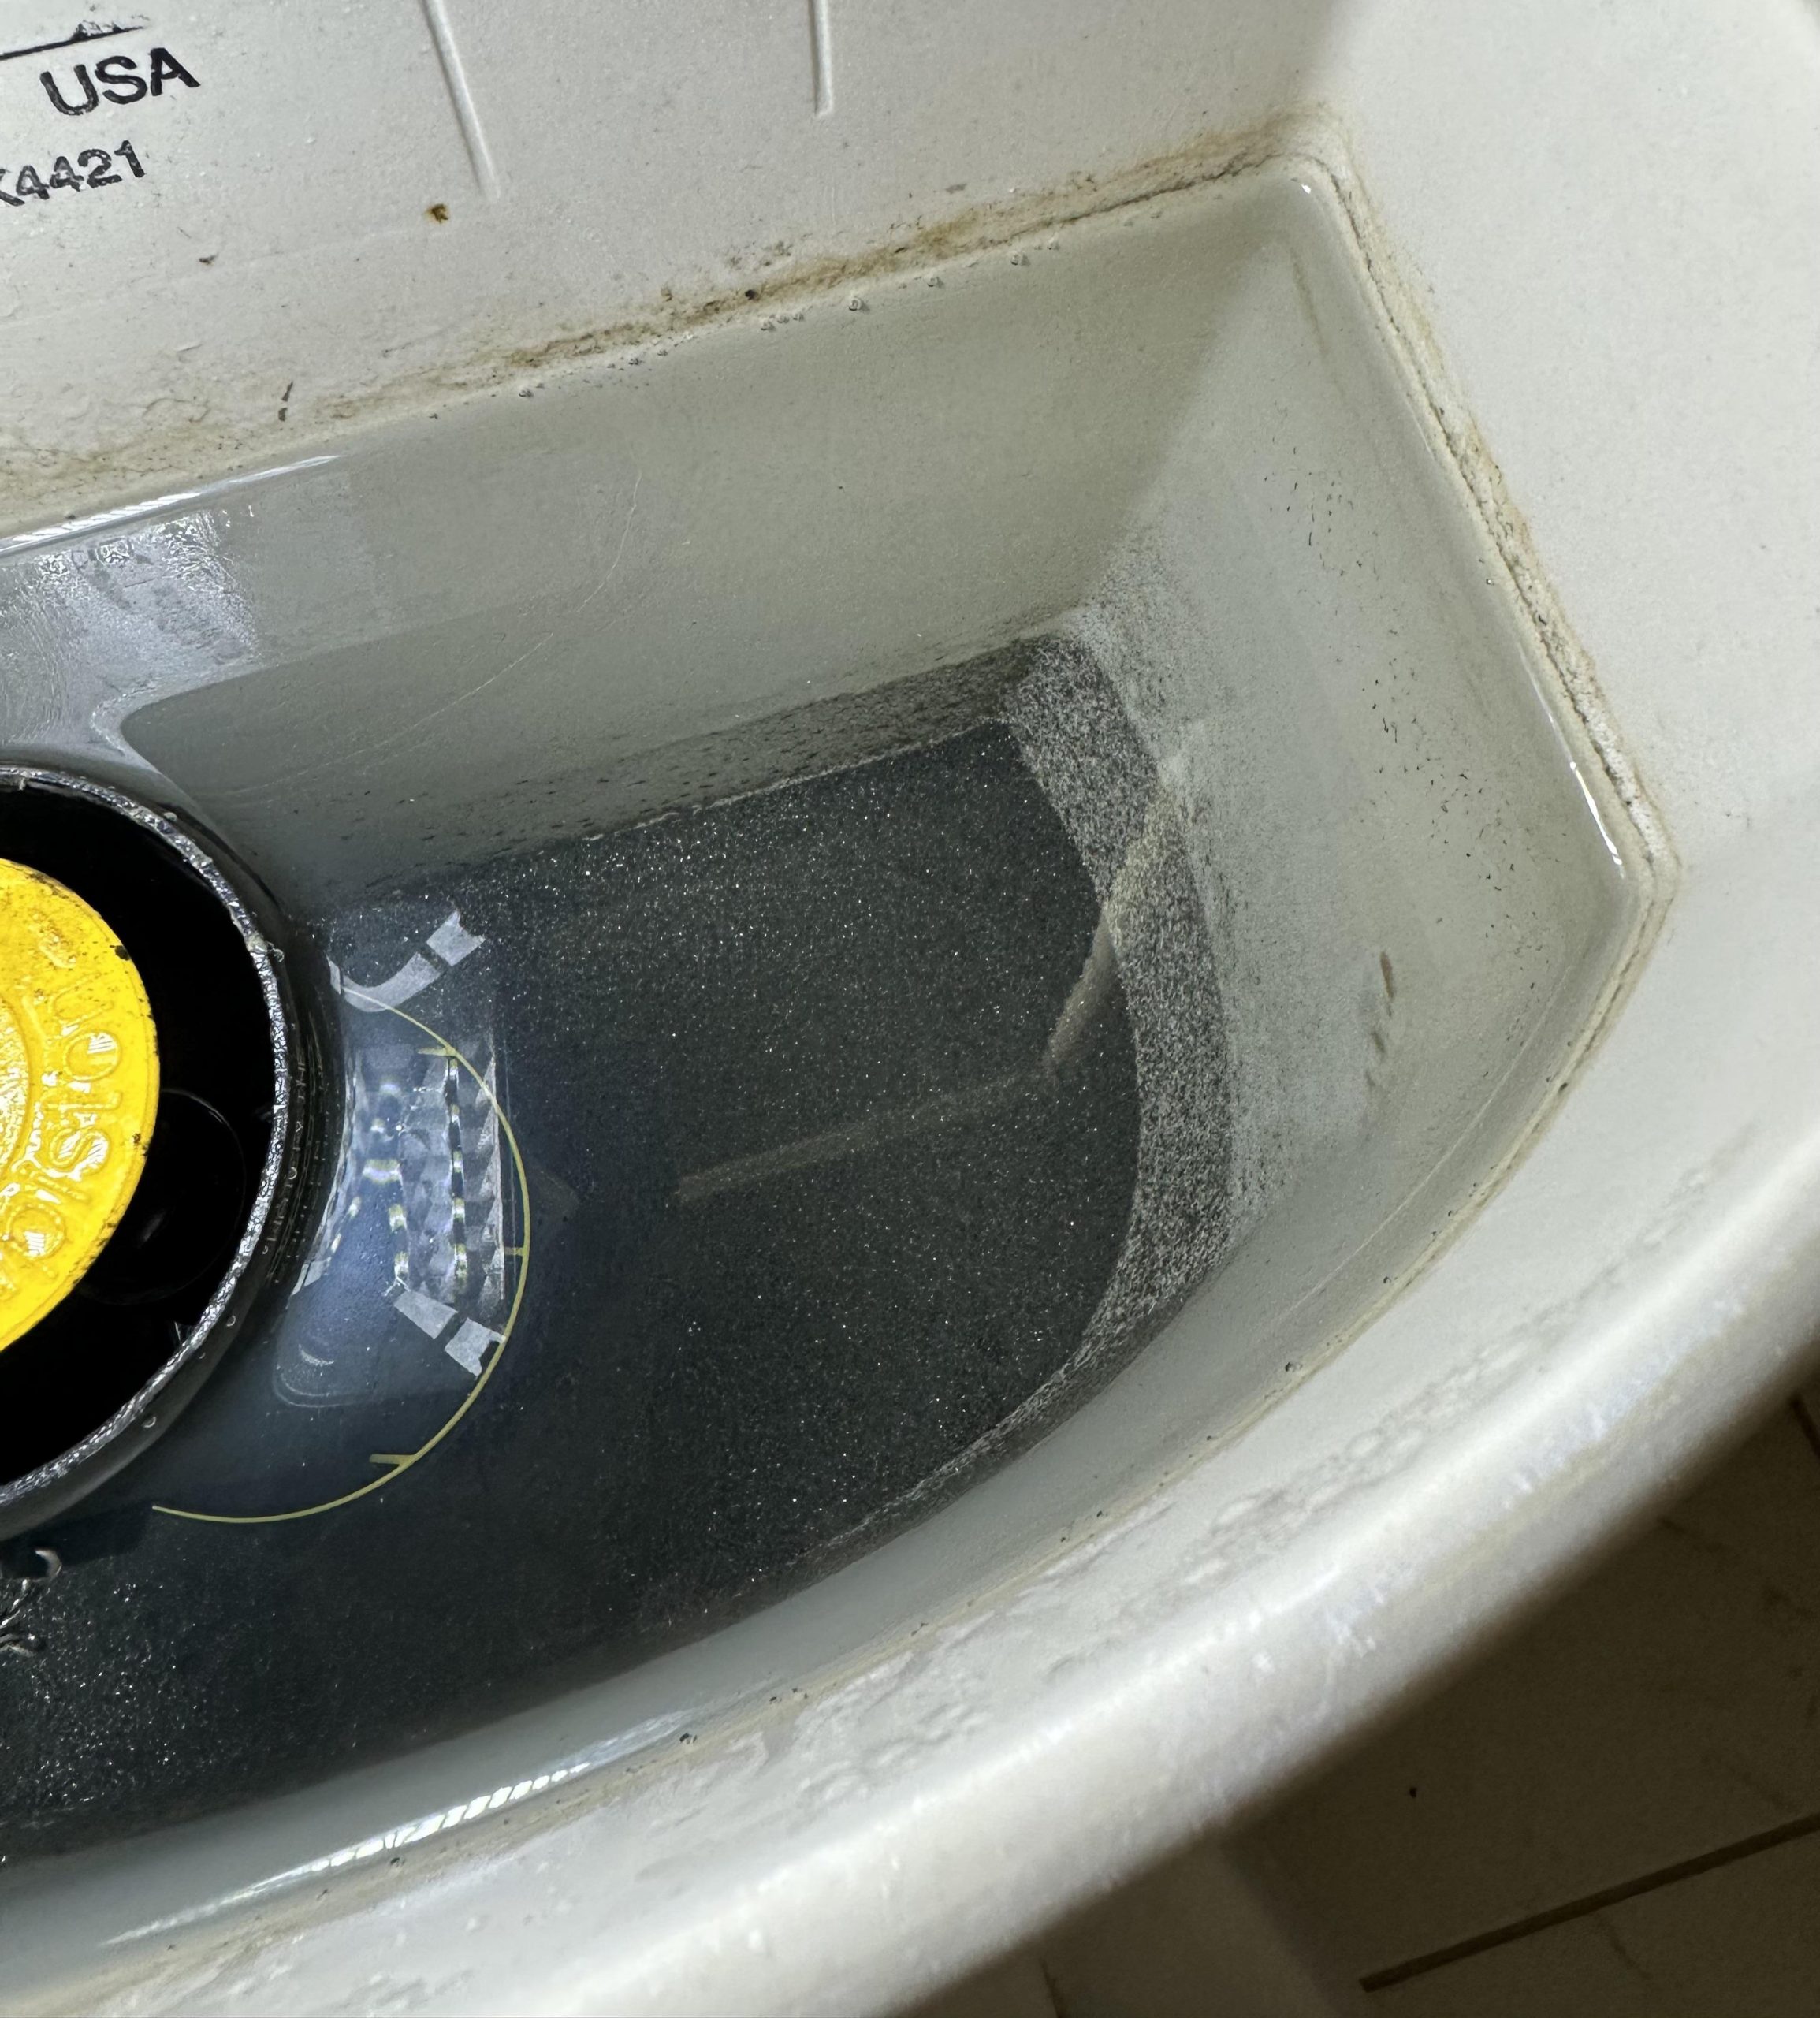 Black Sediment in Toilet Bowl